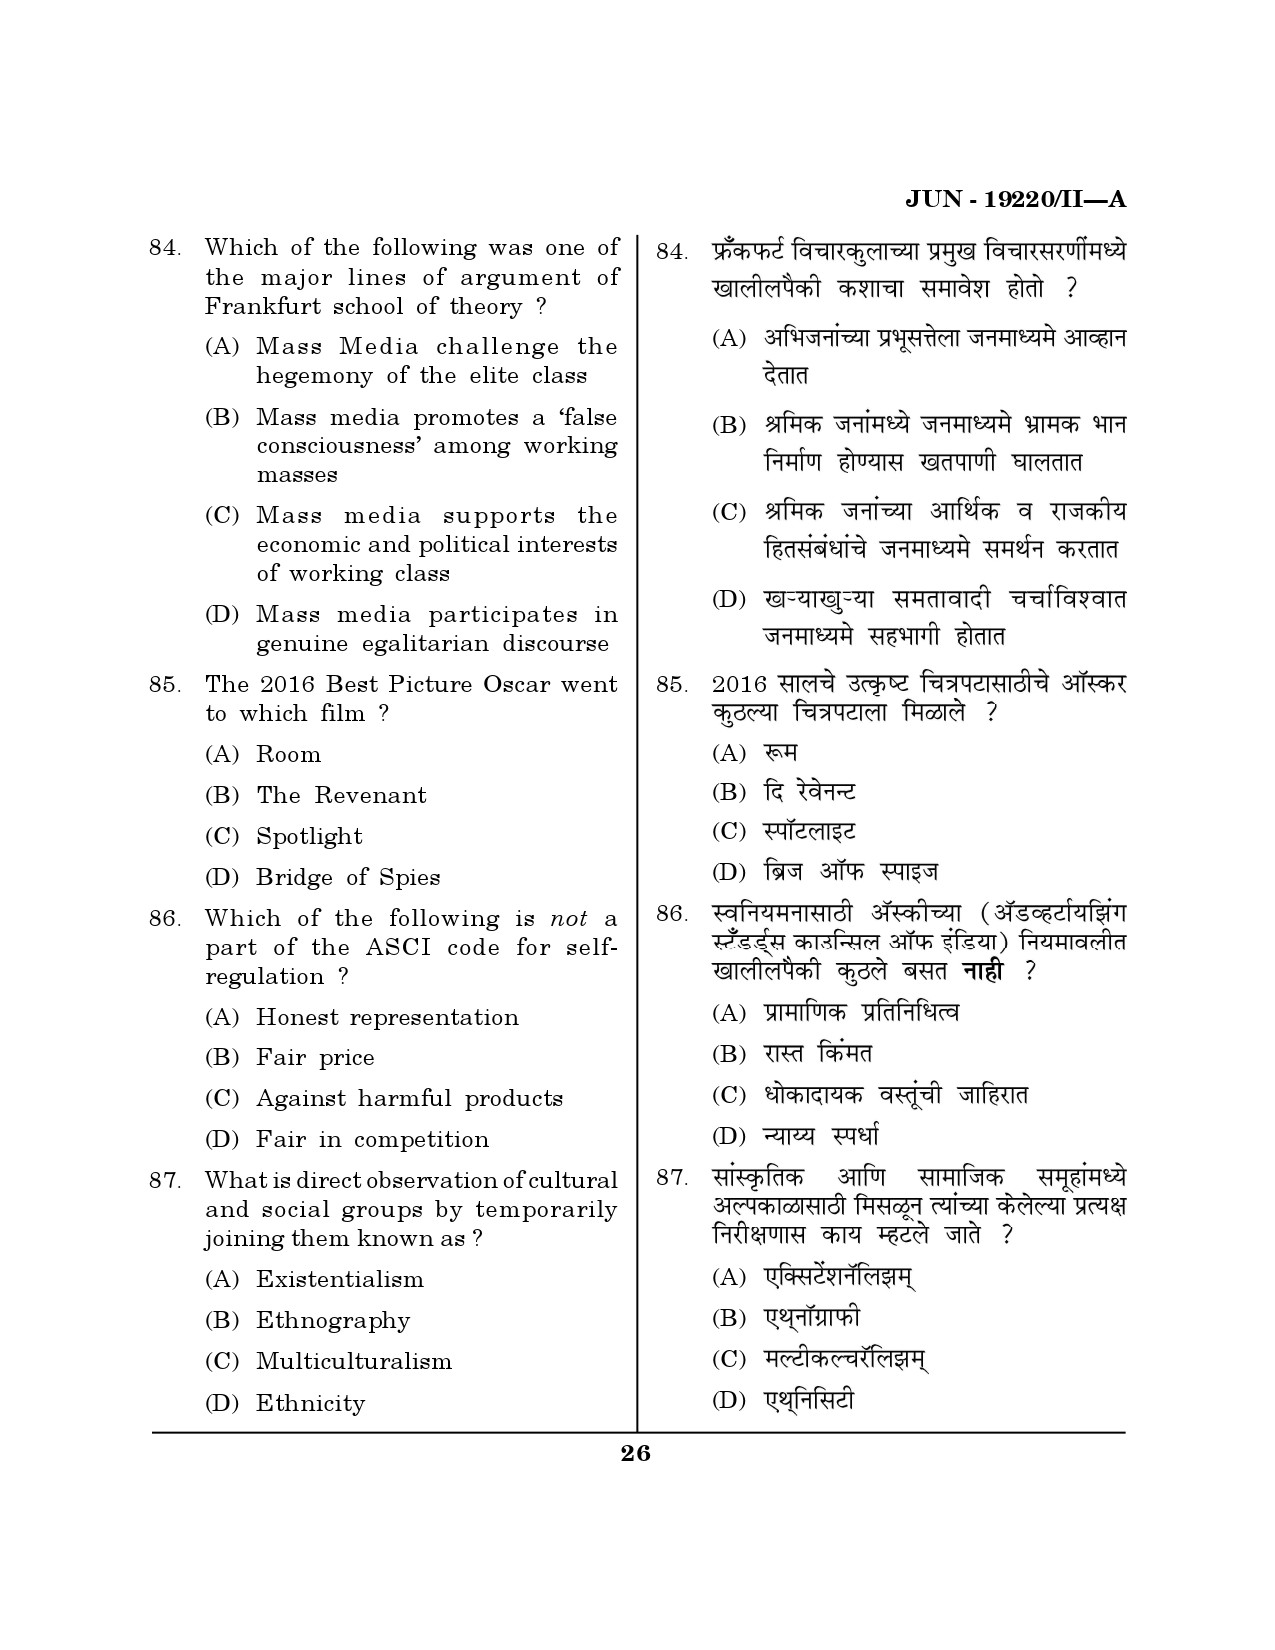 Maharashtra SET Journalism and Mass Communication Question Paper II June 2020 25